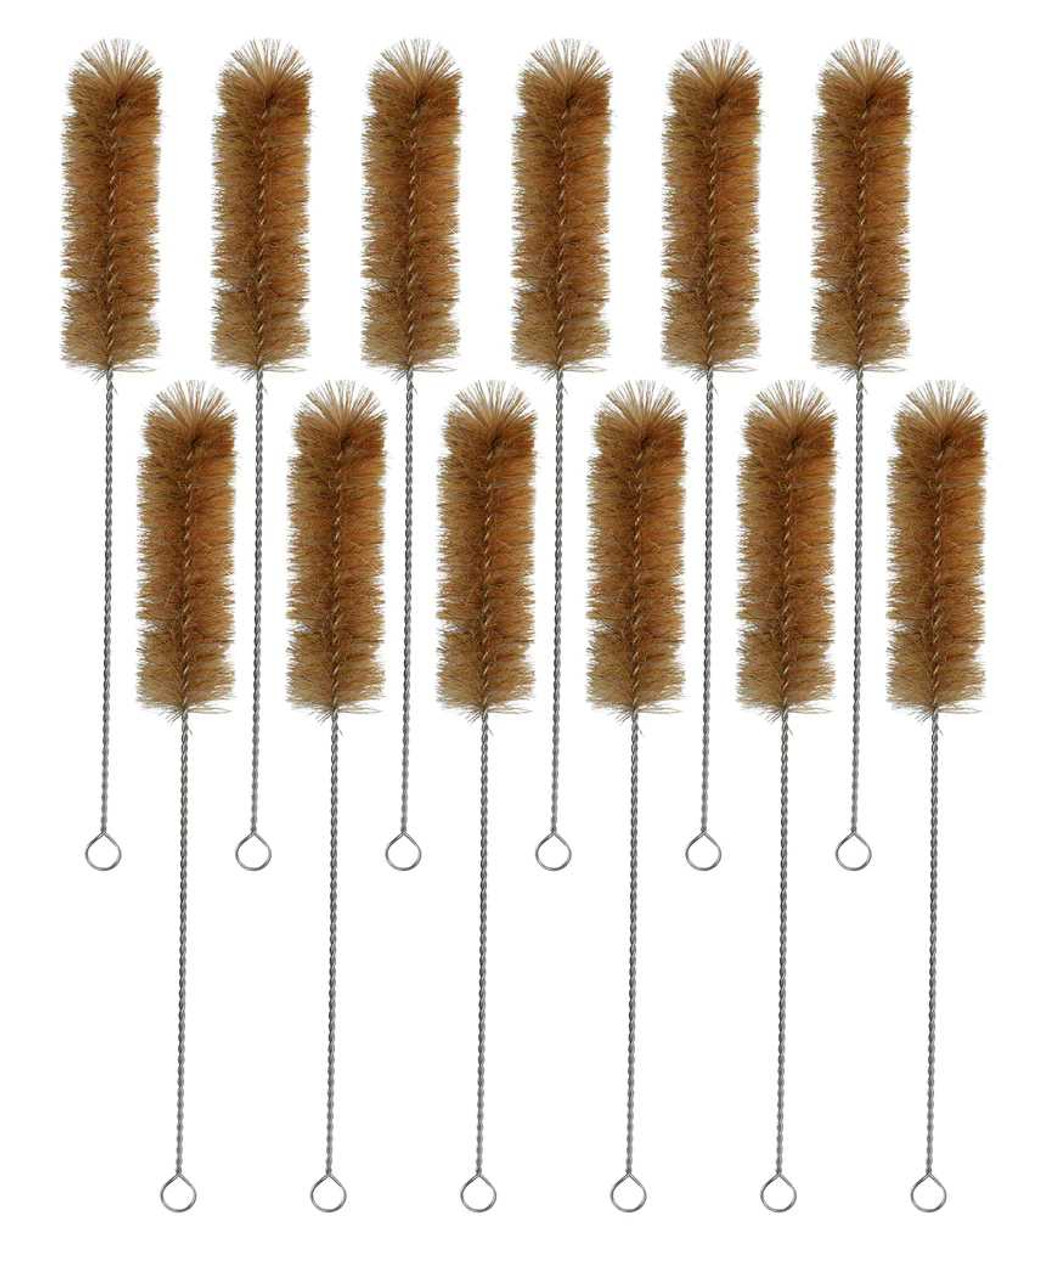 Test Tube Bristle Brush / Test Tubes Cleaning Brushes / Lab